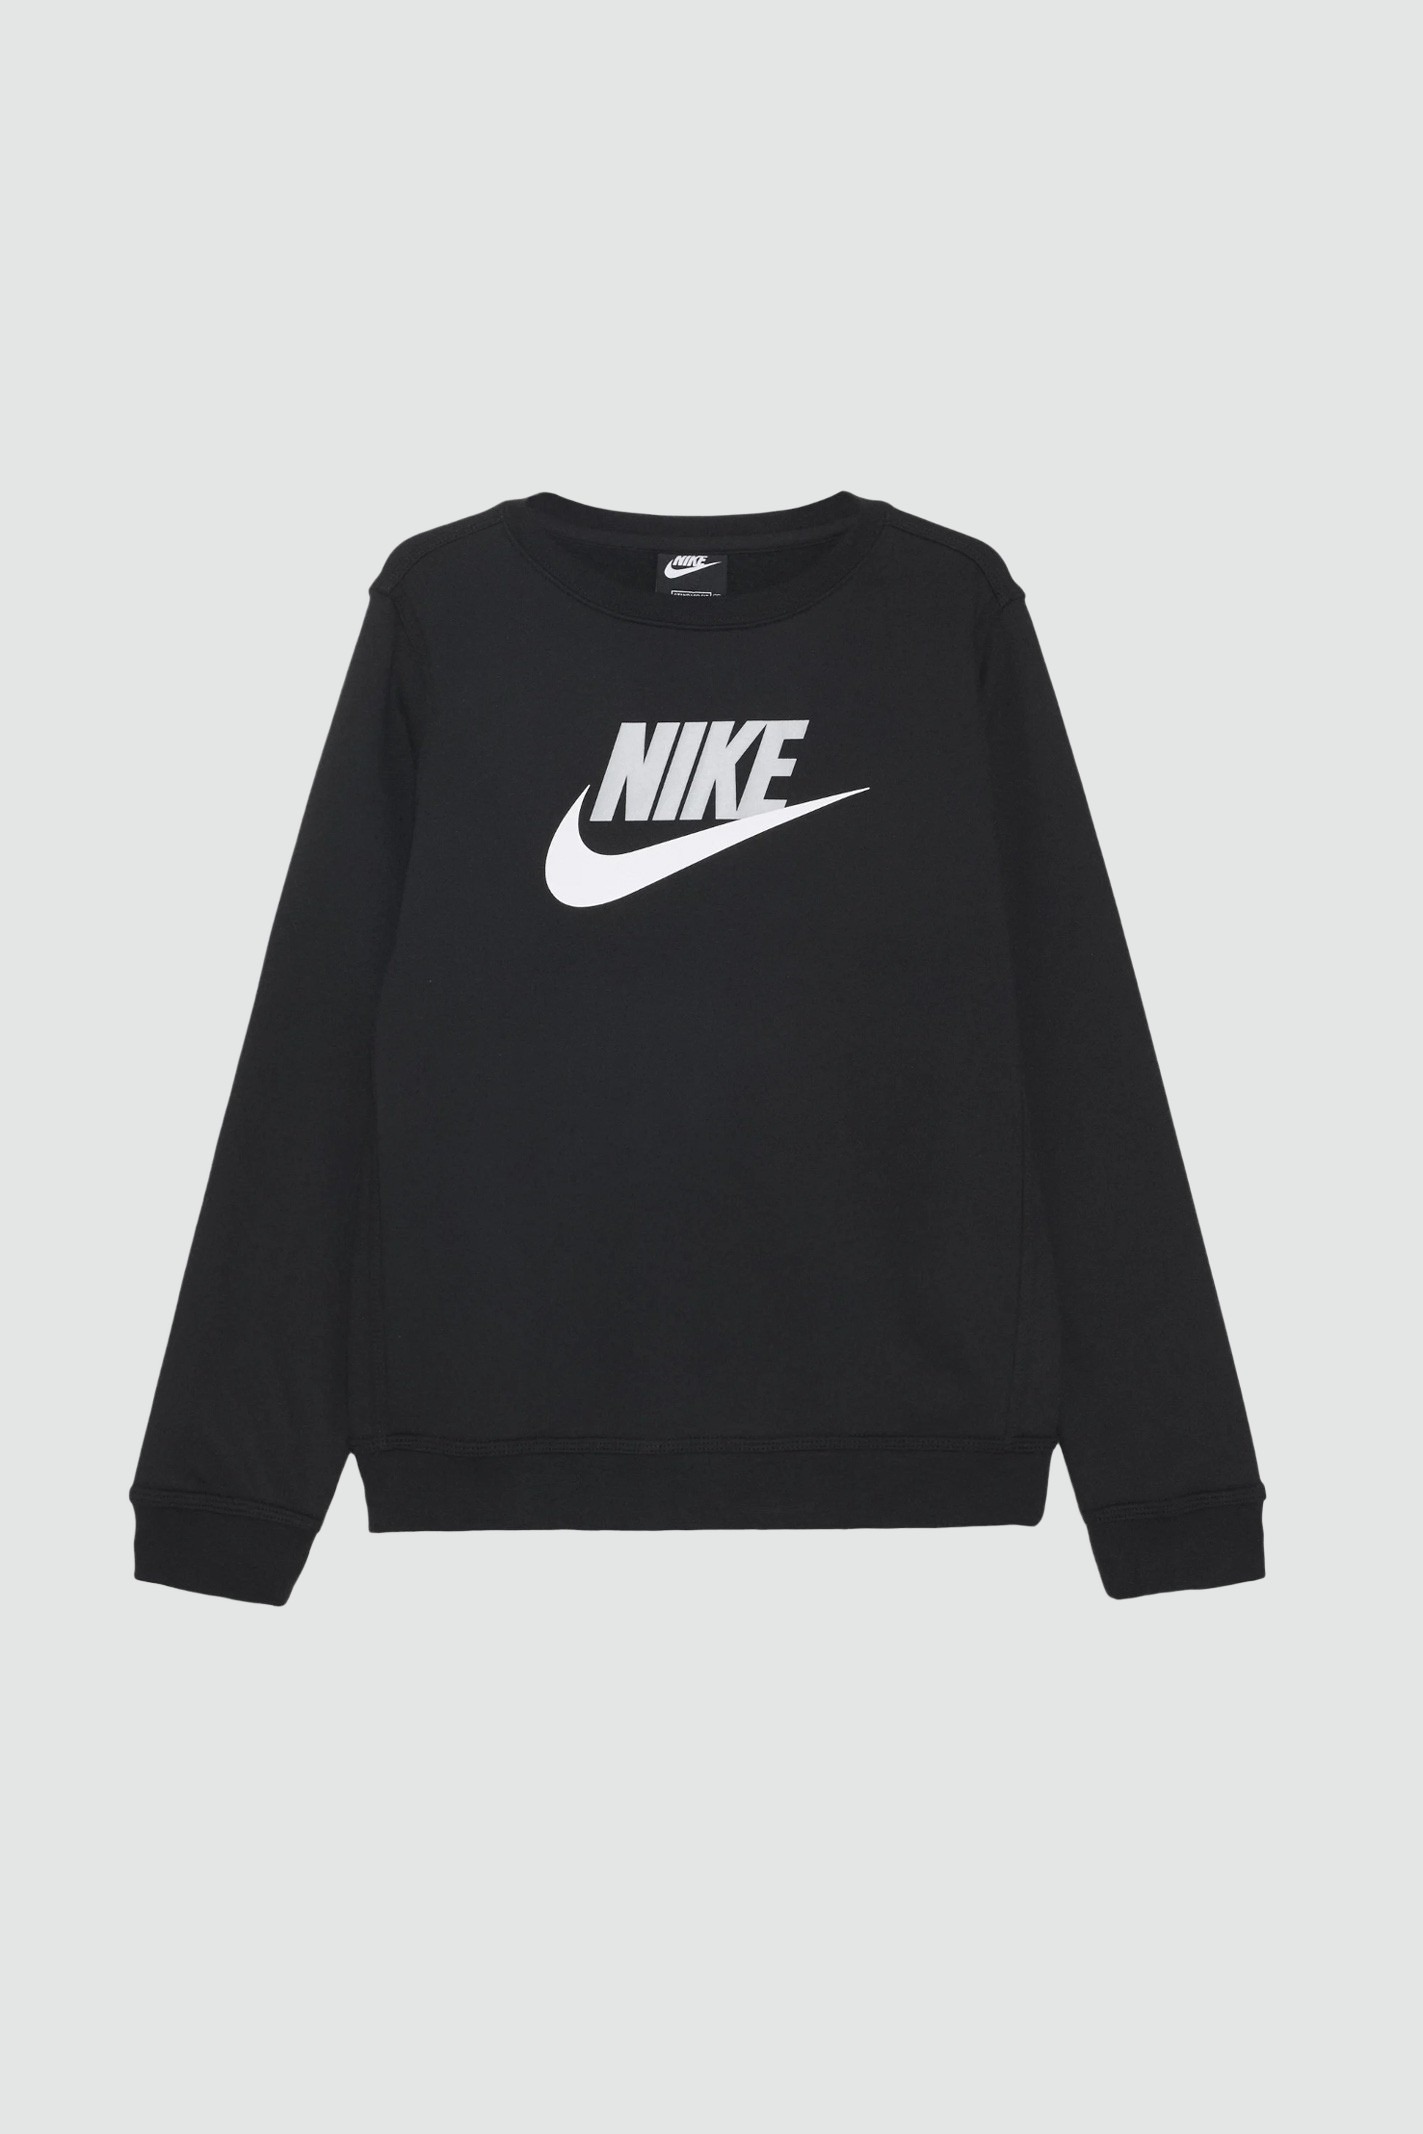 Black baby club crew sweatshirt with contrasting logo NIKE | CV9297011